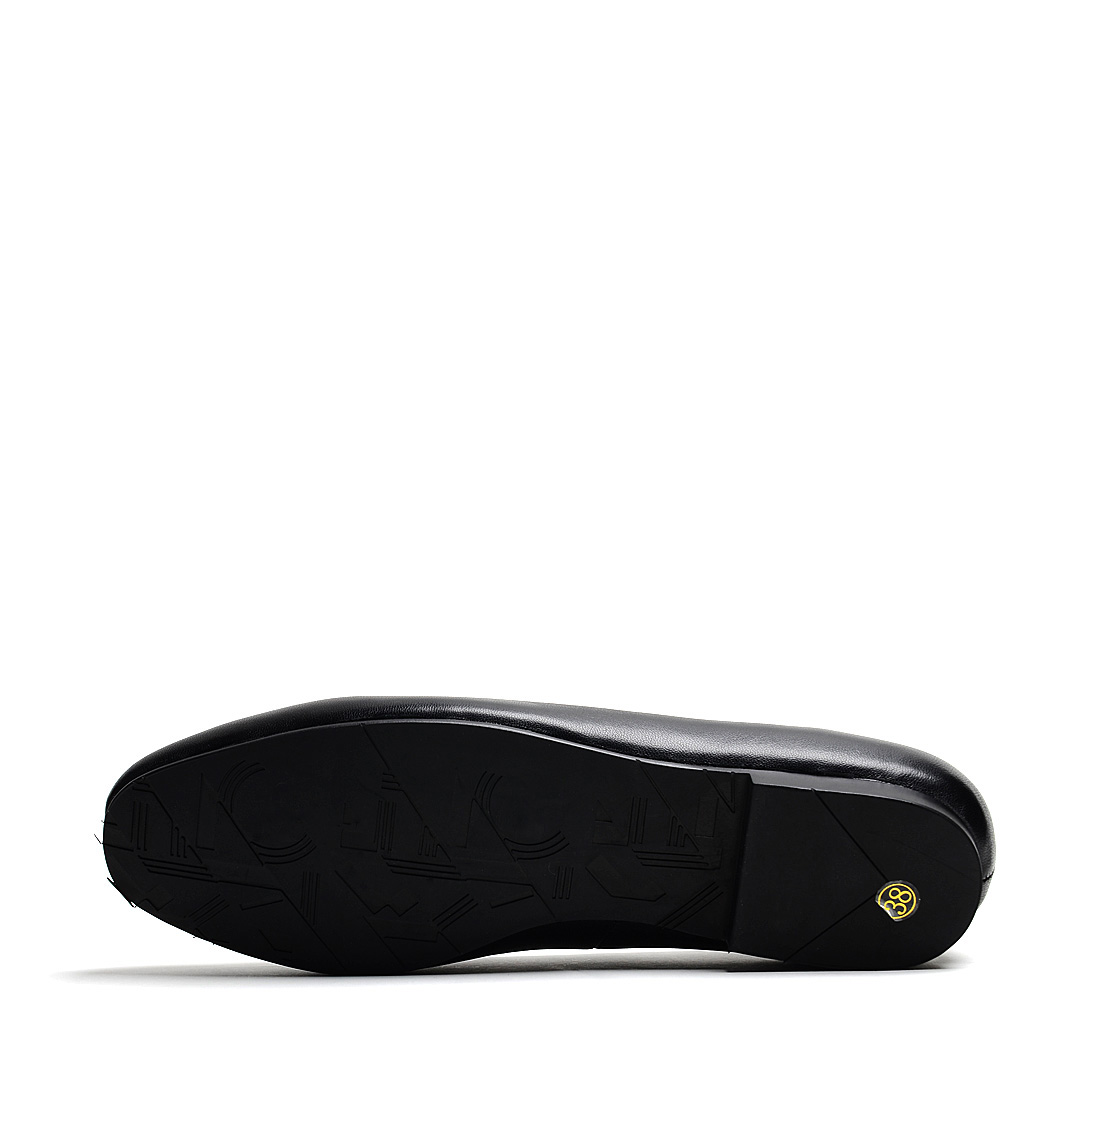 [RedLoafer]优雅风简约羊皮革单鞋(尺码标准)
编号：A3288D1A76